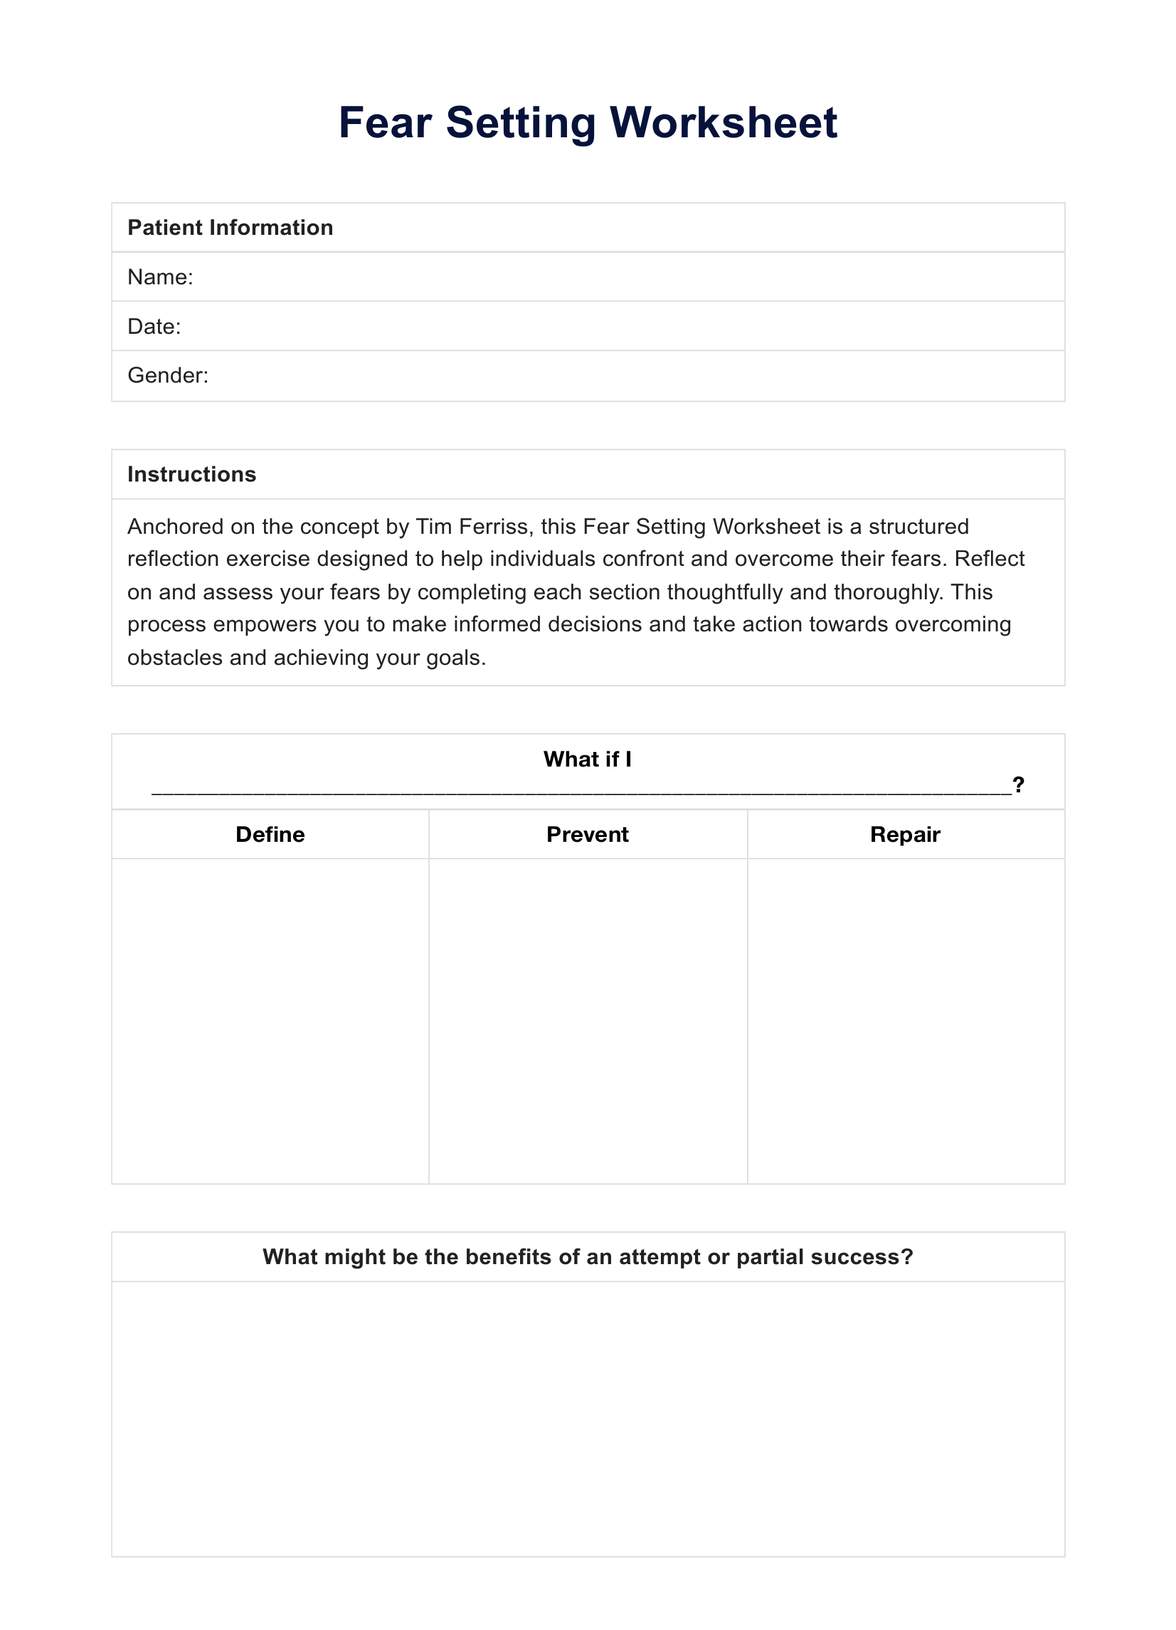 Fear Setting Worksheet PDF Example